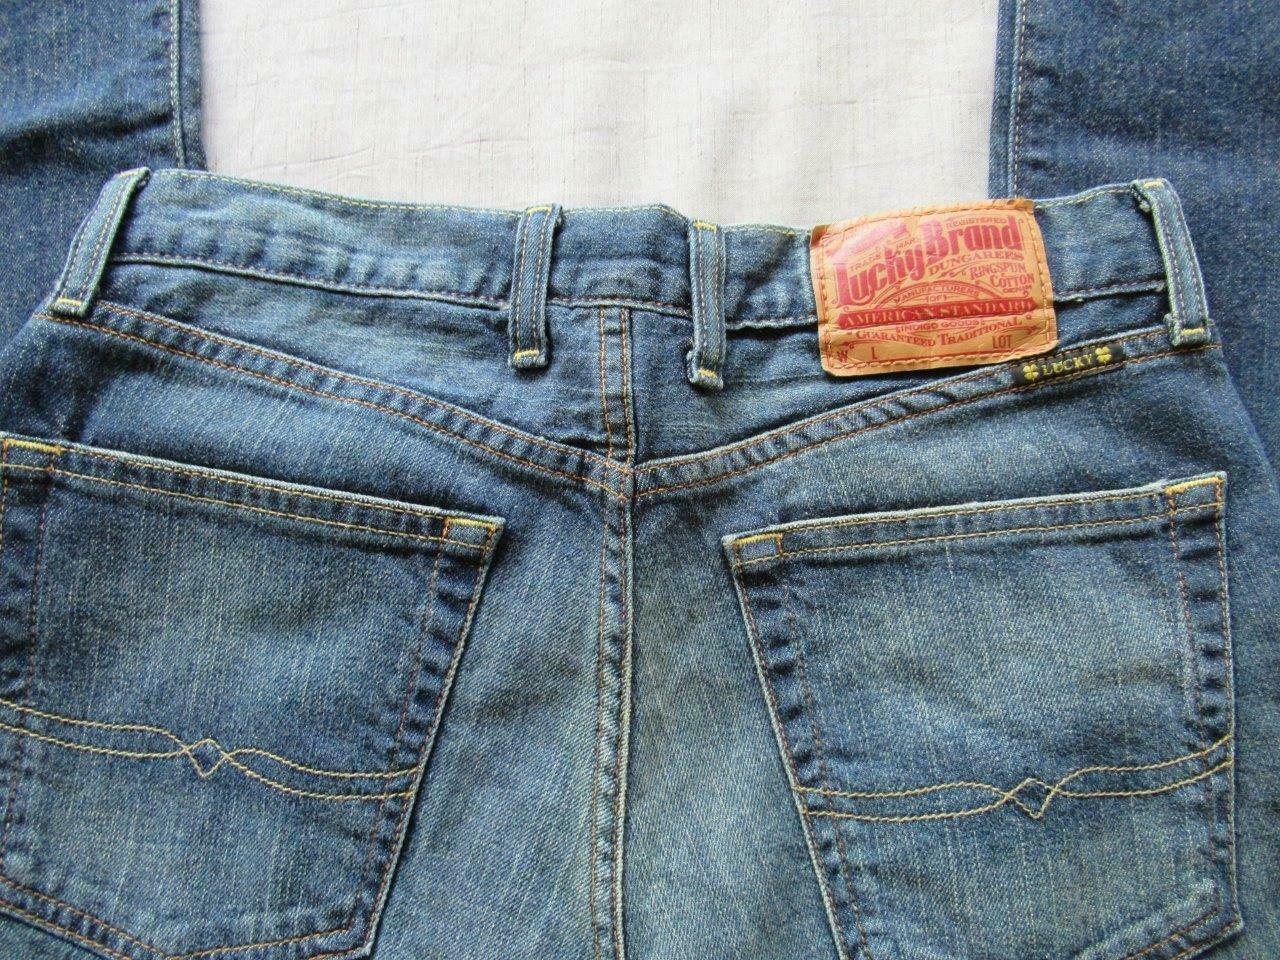 Lucky Brand jeans Gene Montesano straight leg 28x34 medium wash NEW - Jeans